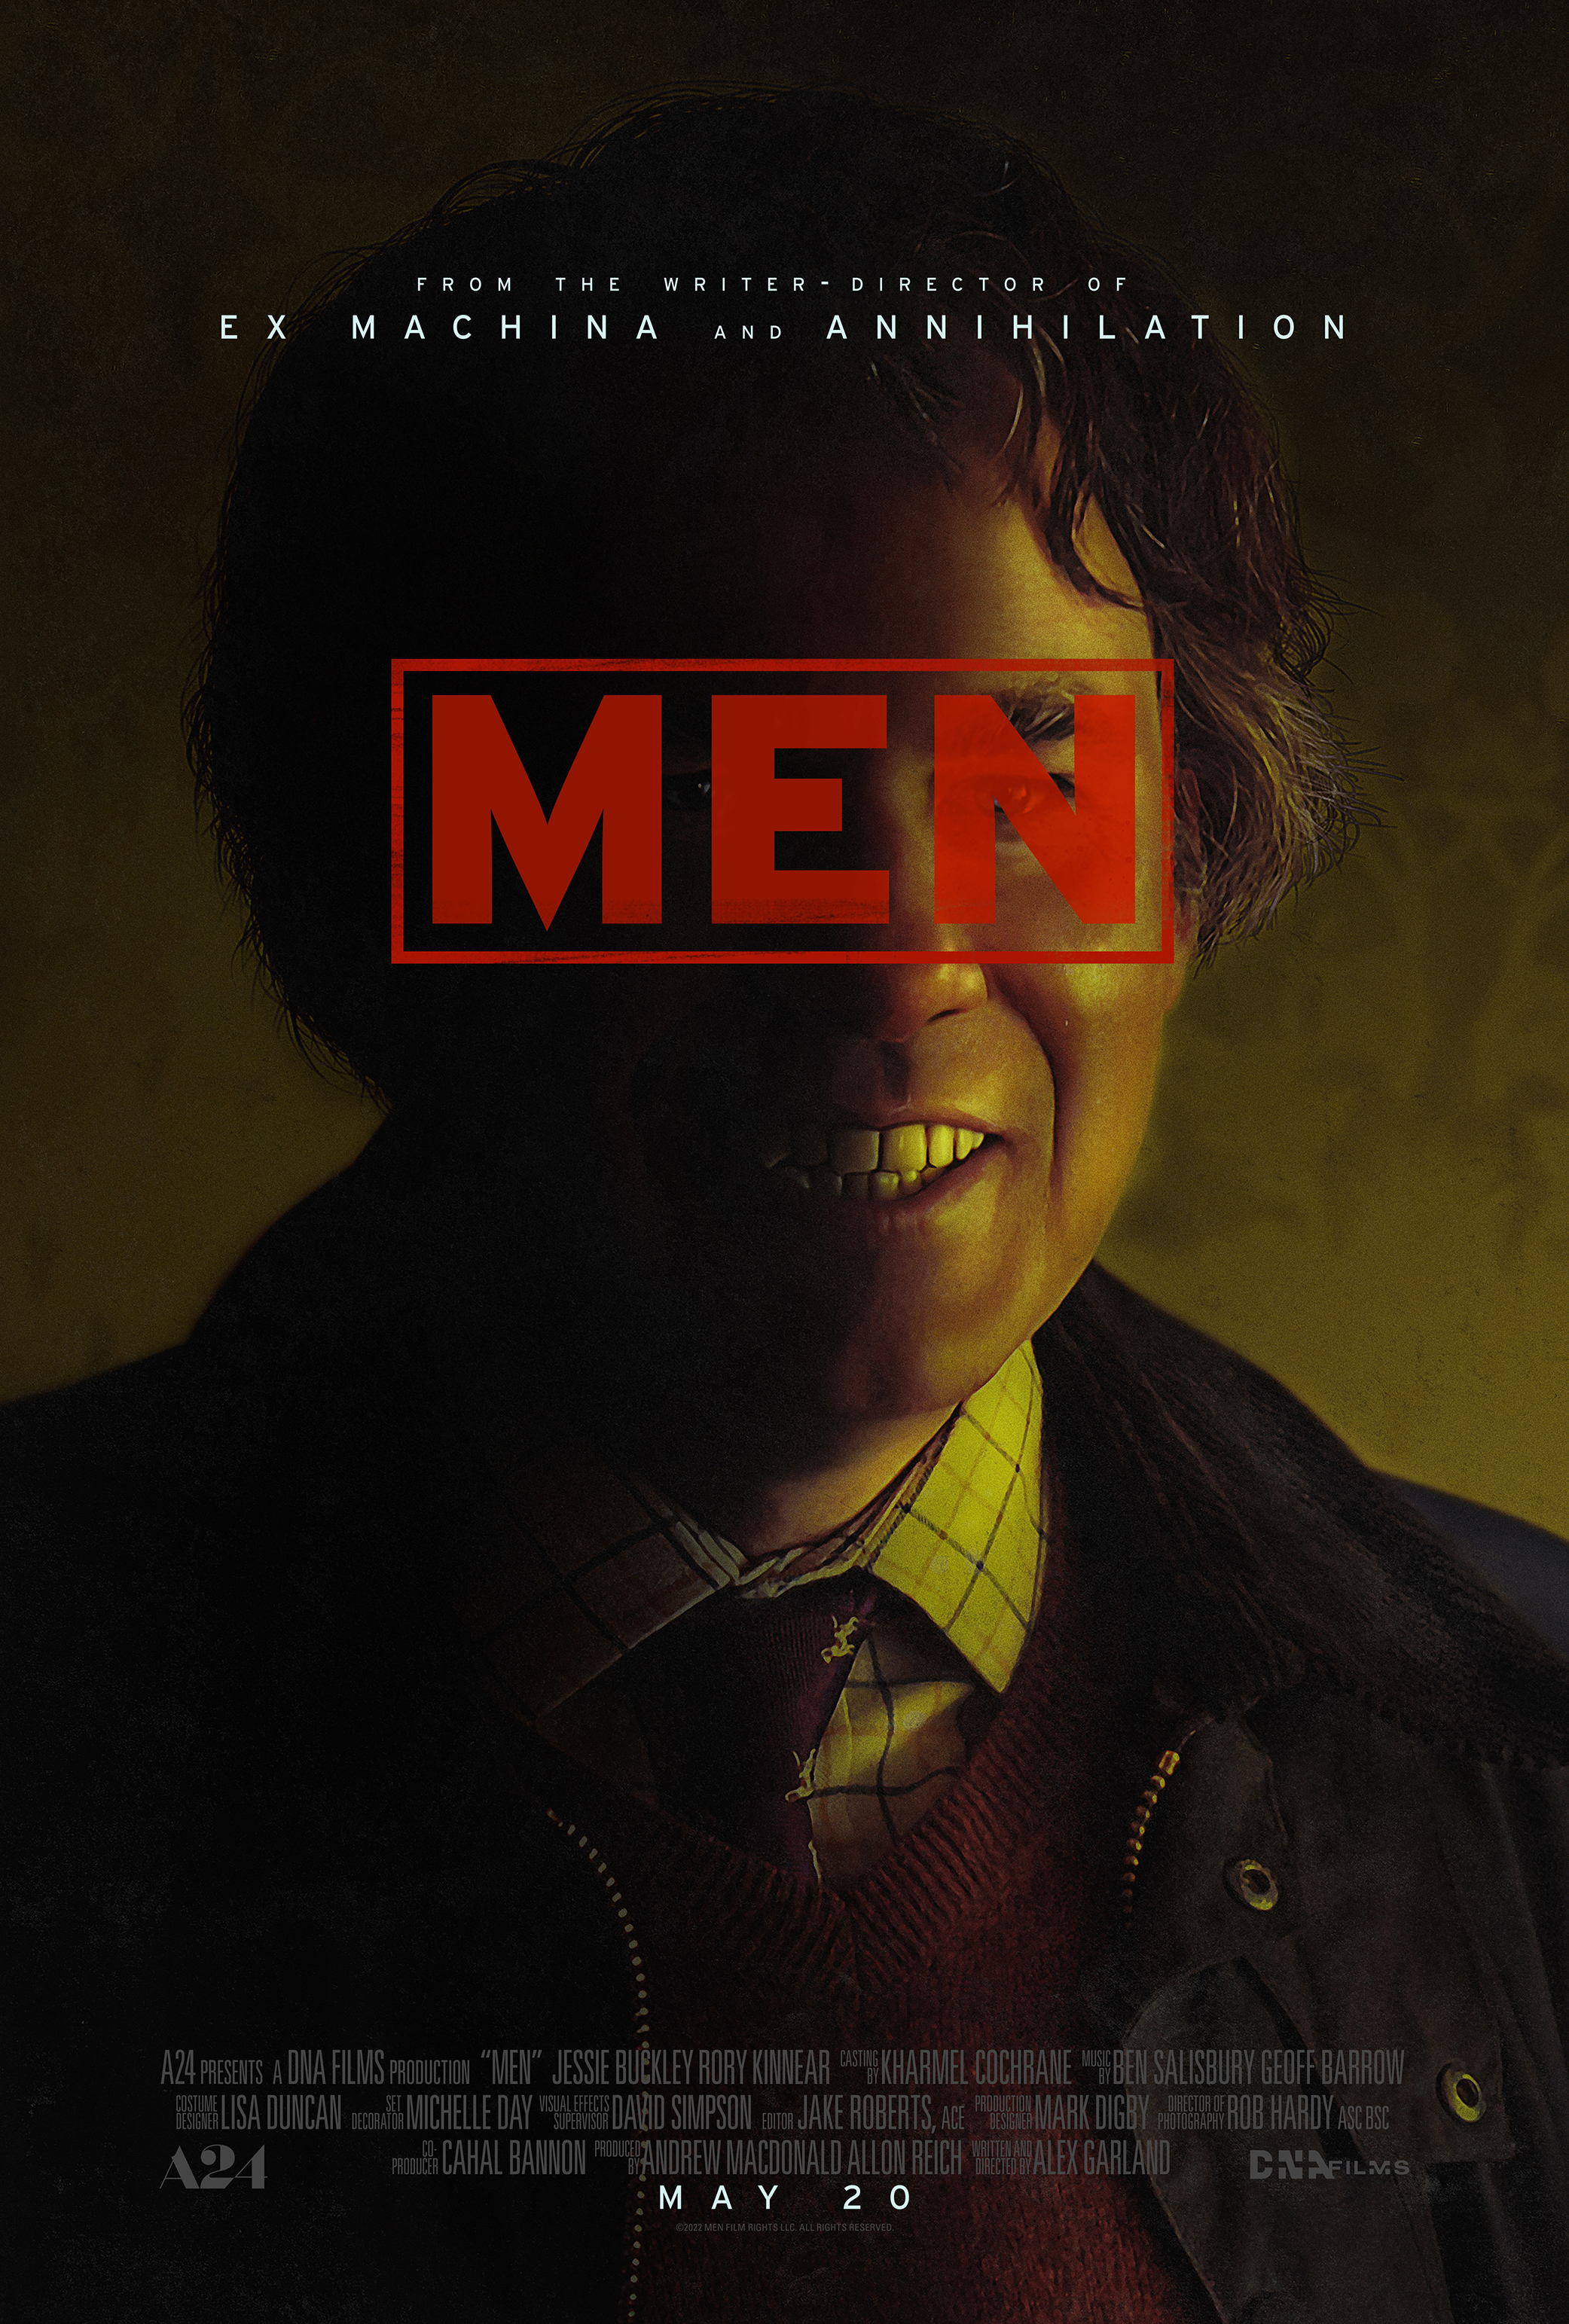 'Men' film poster. 